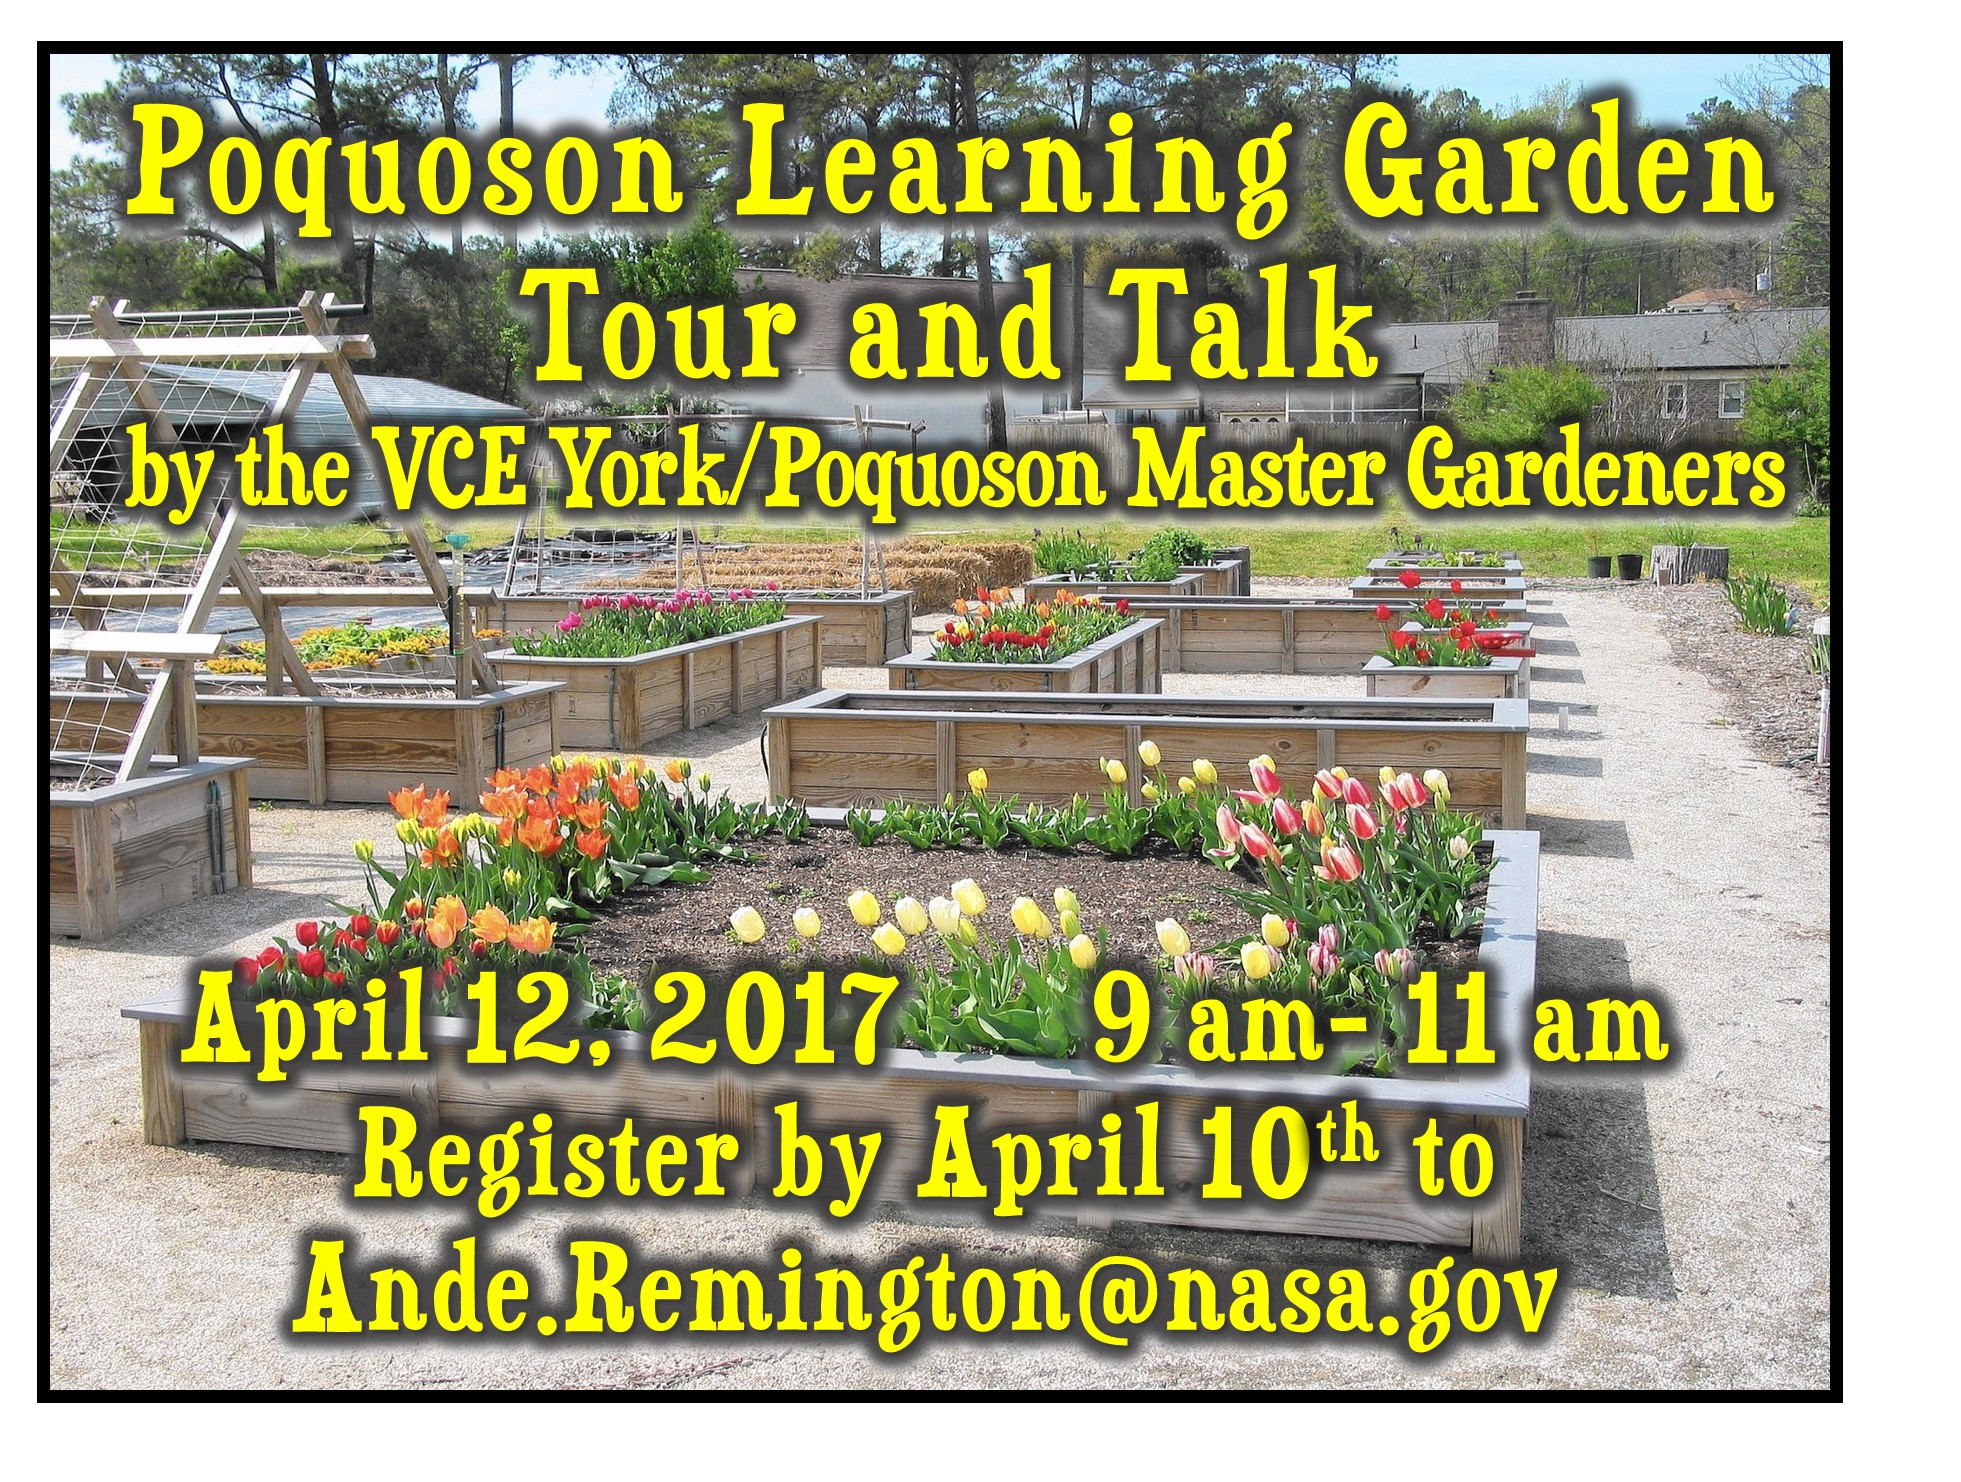 Poquoson learning garden advertisement 2017